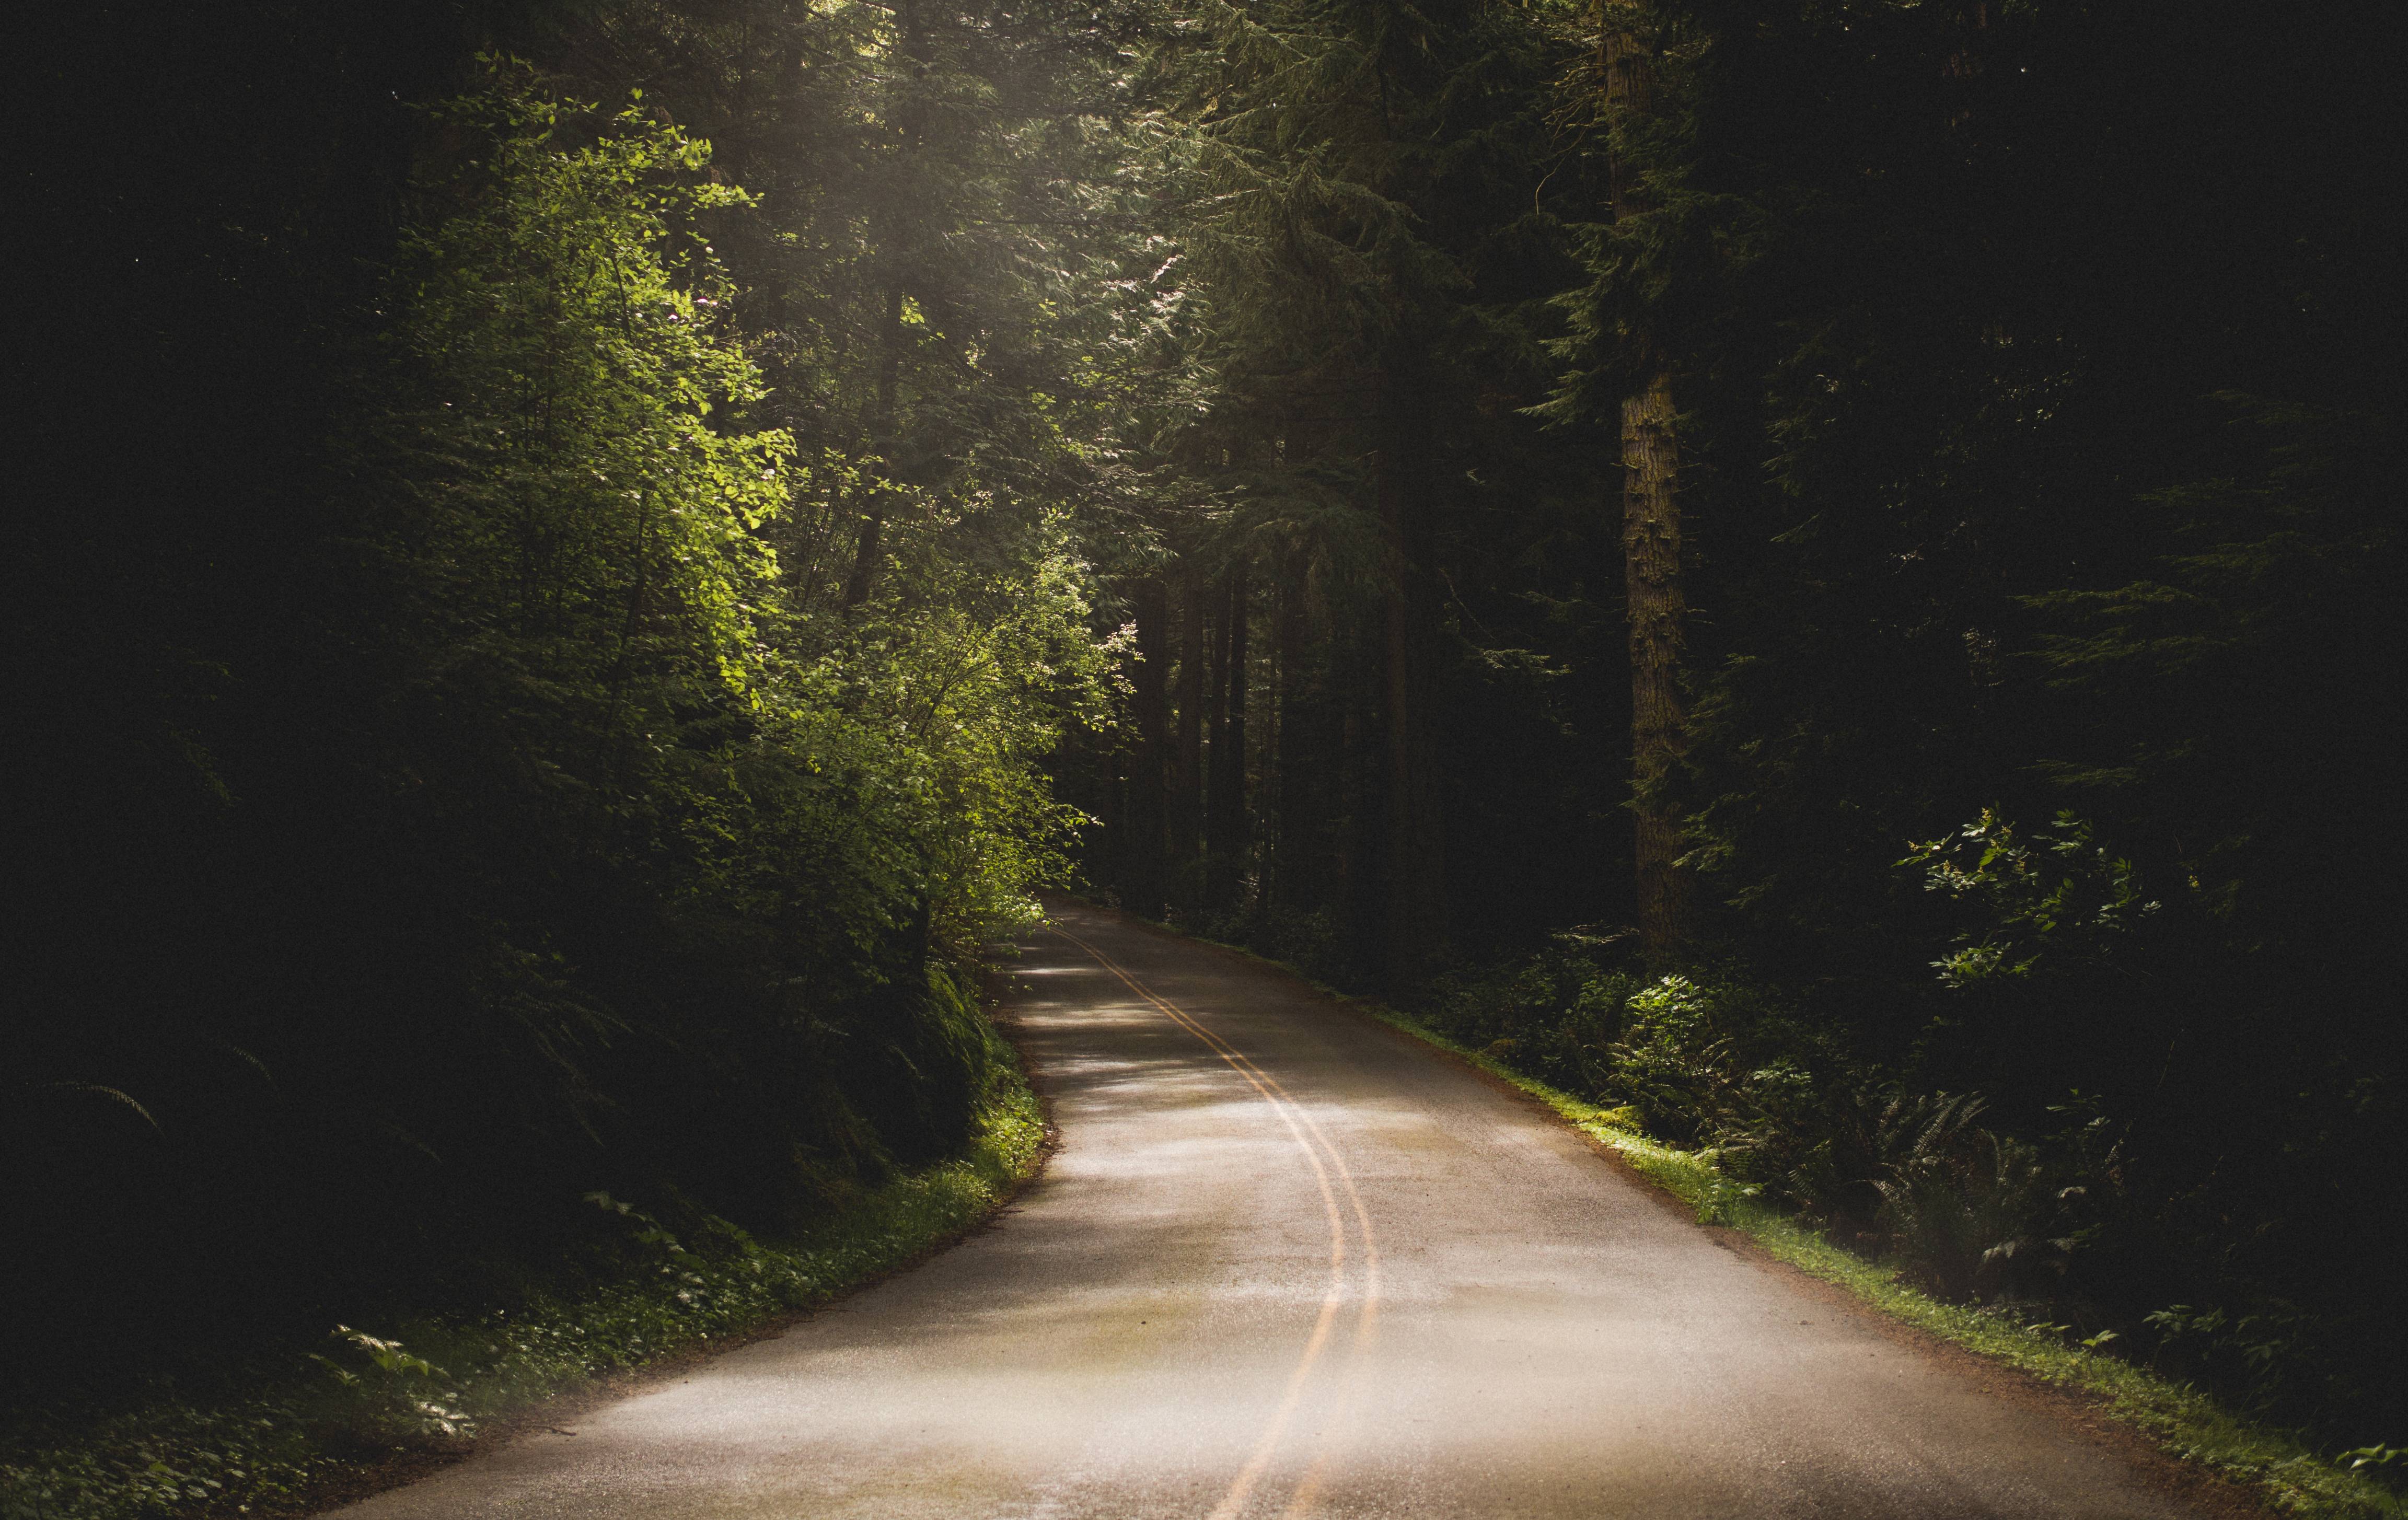 Дорога шла лес озера. Дорога в лесу. Лесная дорога. Темная Лесная дорога. Дорога вдоль леса.